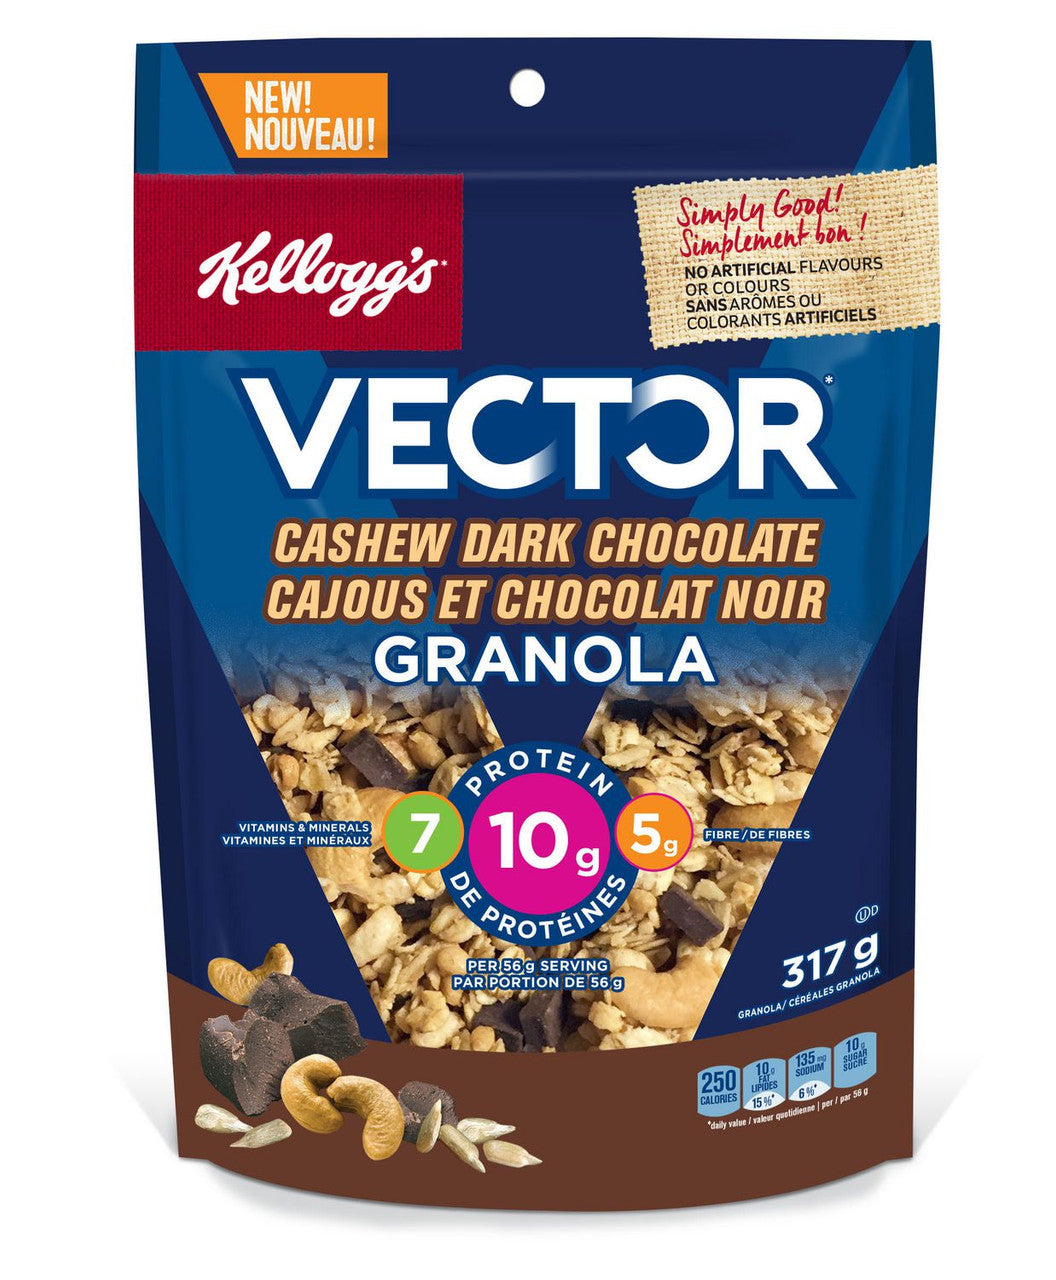 Kellogg's Vector Granola, Cashew Dark Chocolate, 317g/11oz. (Imported from Canada)